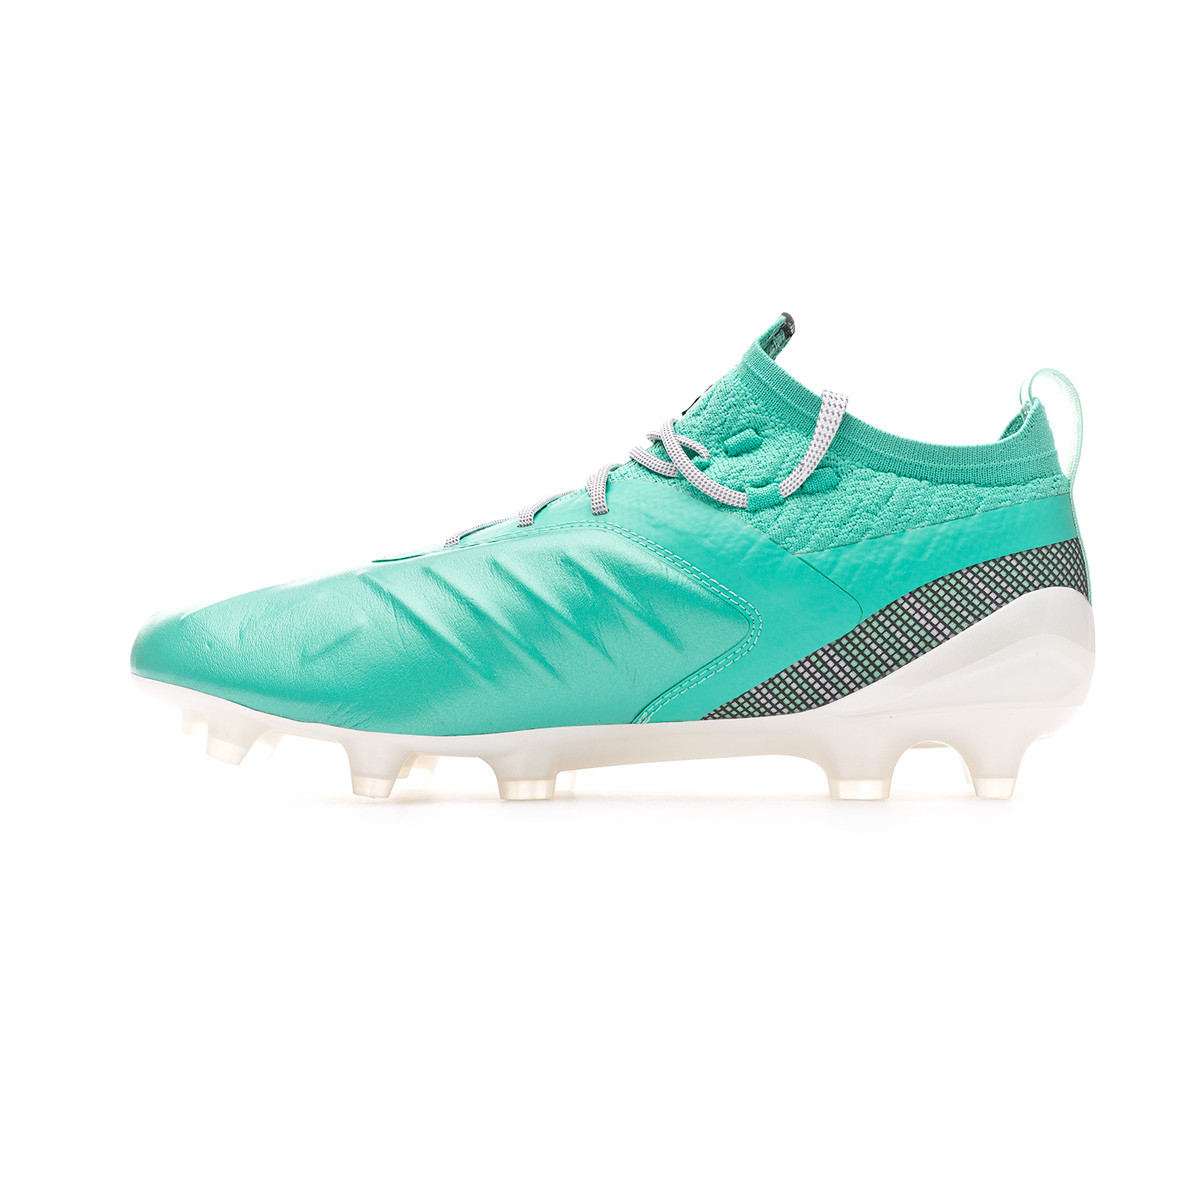 Football Boots Puma One 5 1 Ltd Ed Fg Ag Turquoise Tienda De